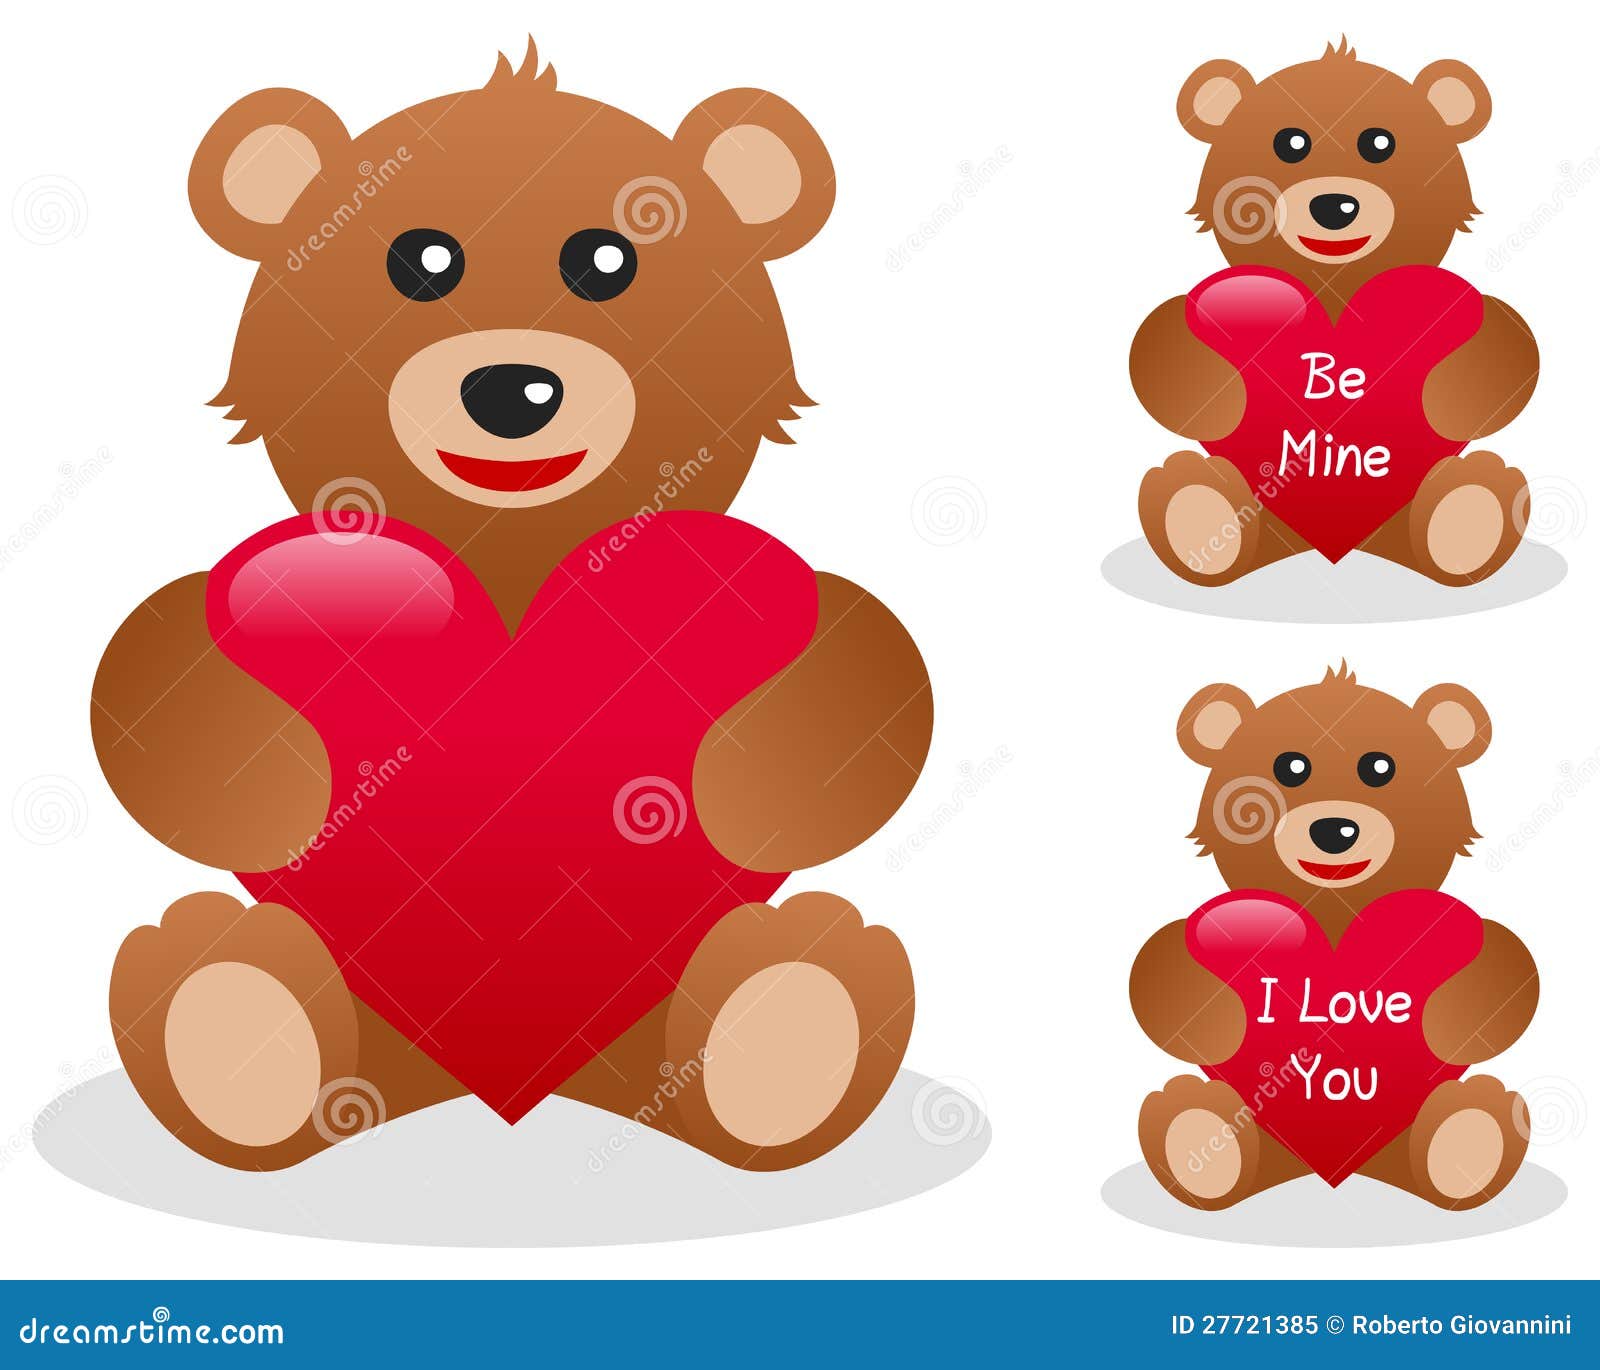 valentine's day teddy bear clipart - photo #41